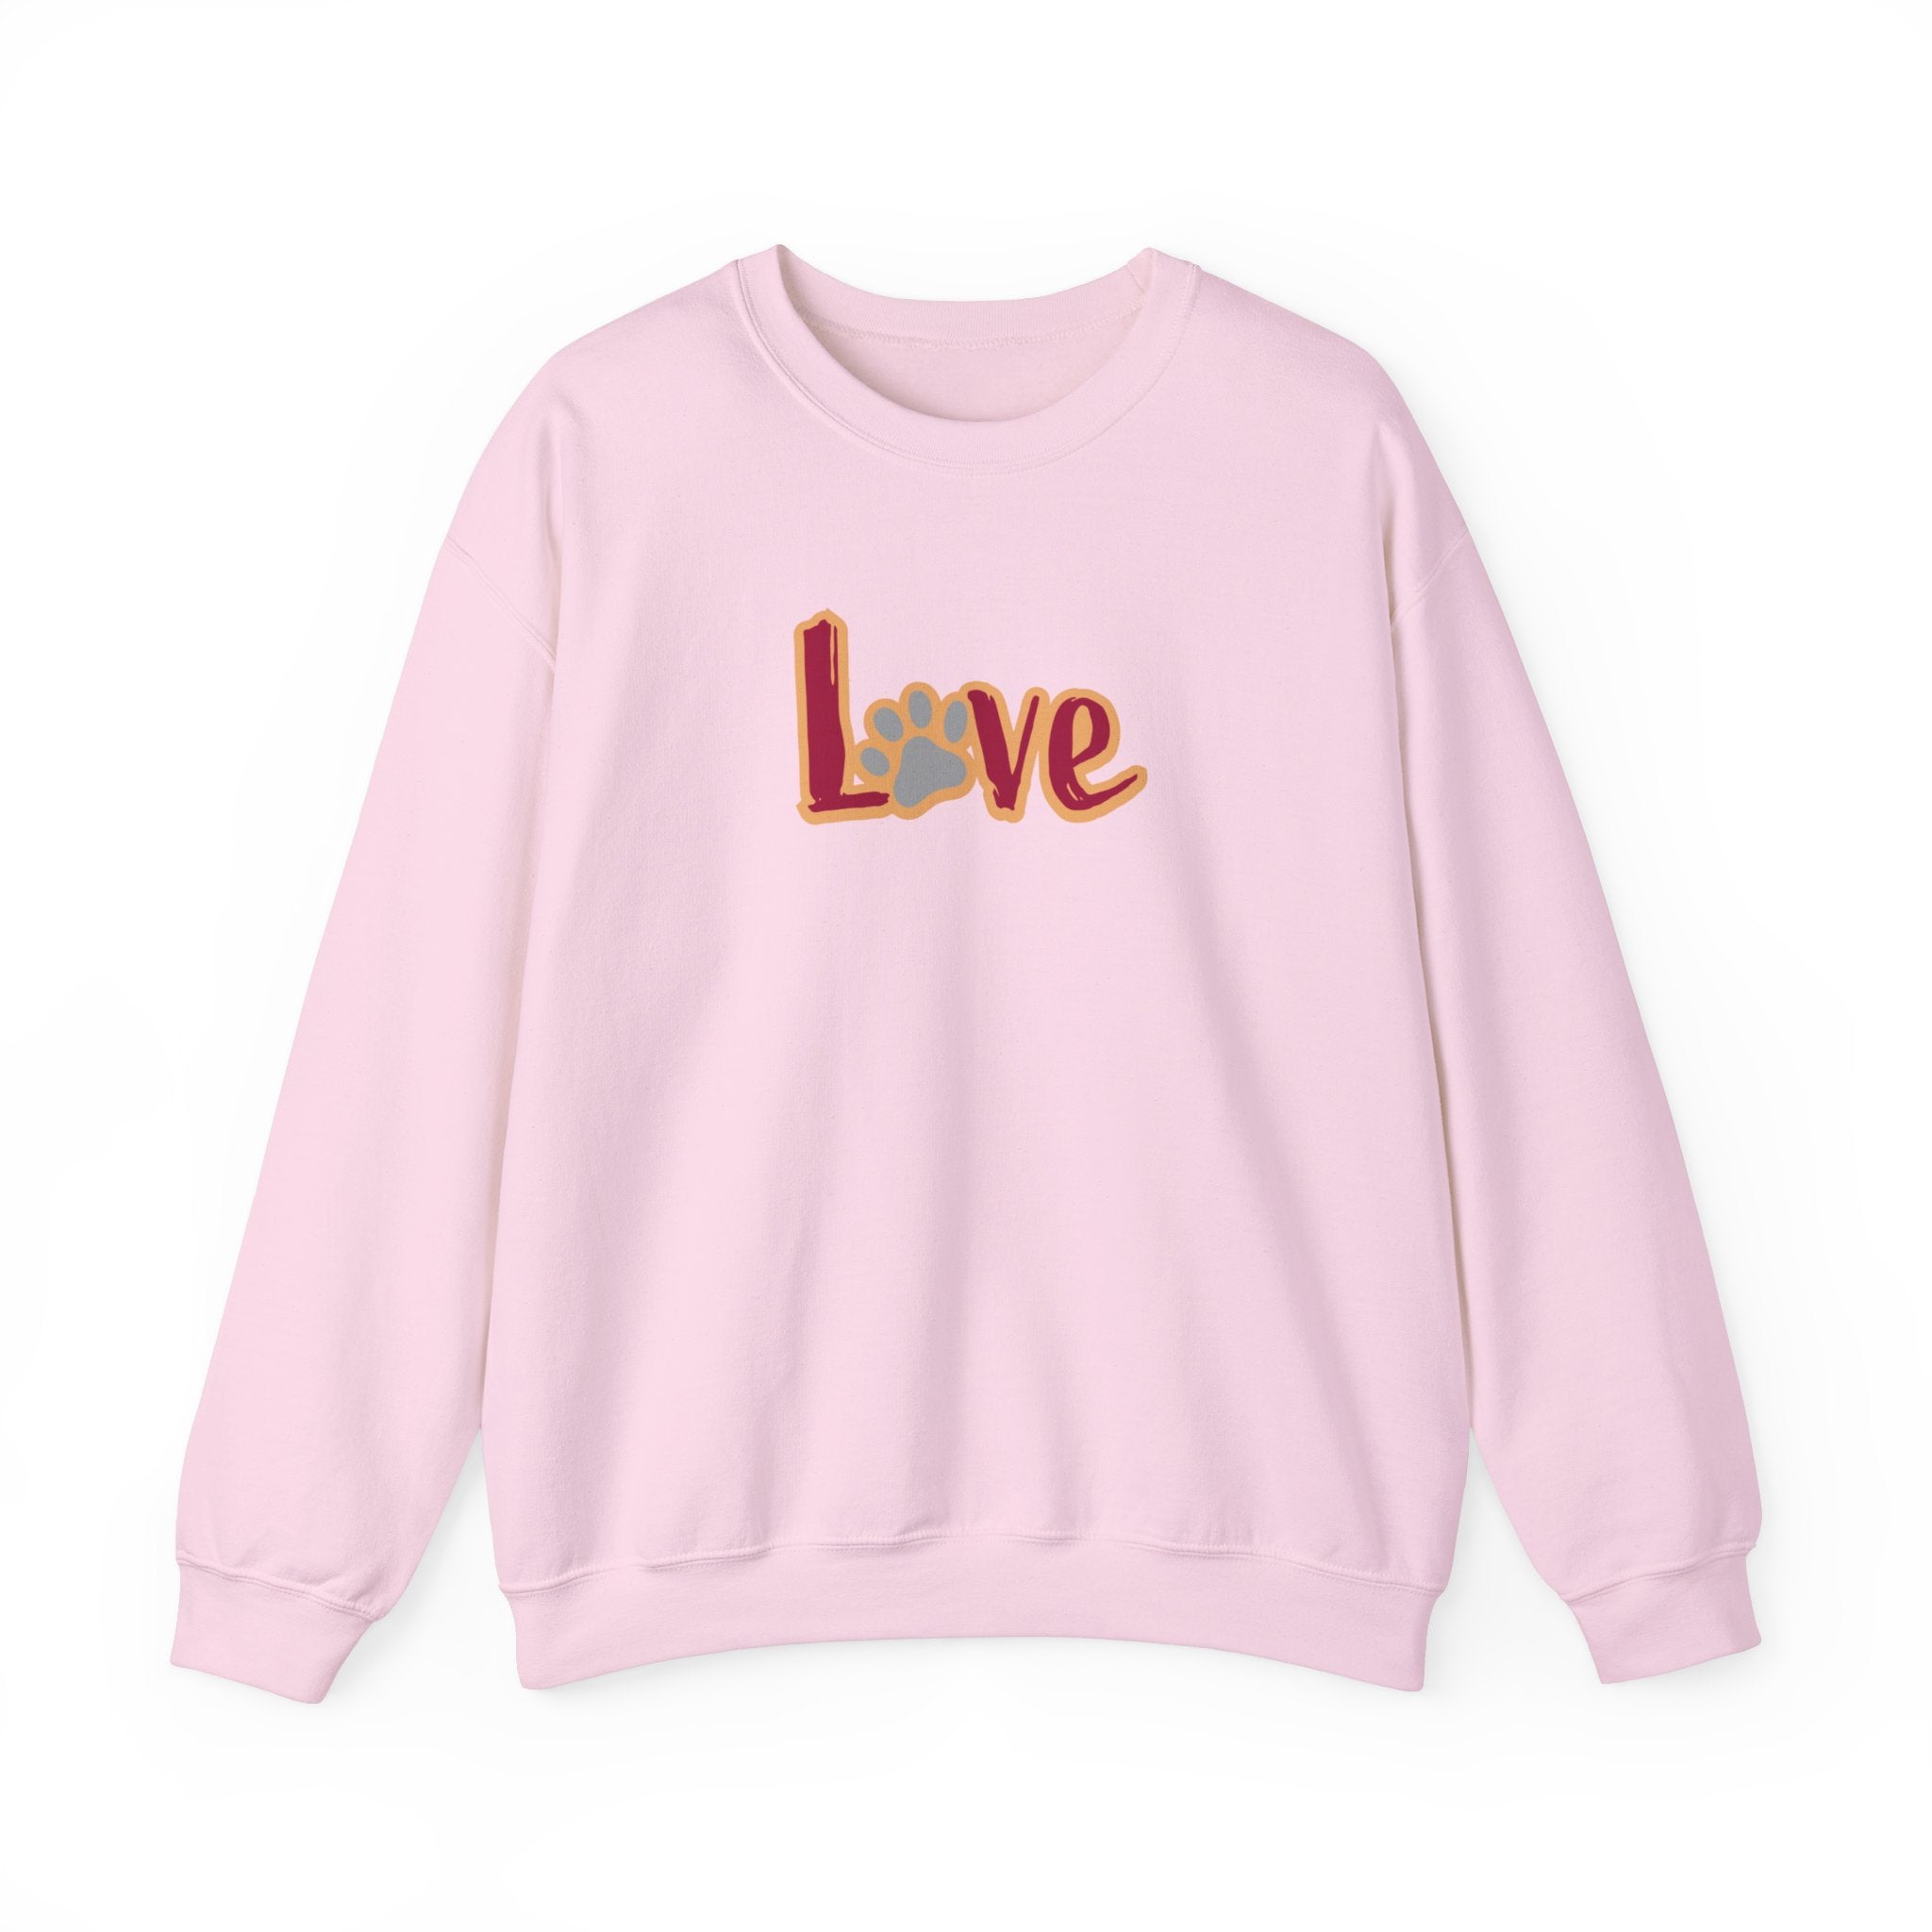 Love Sweatshirt with Dog Print Comfy Crewneck for Dog Lovers